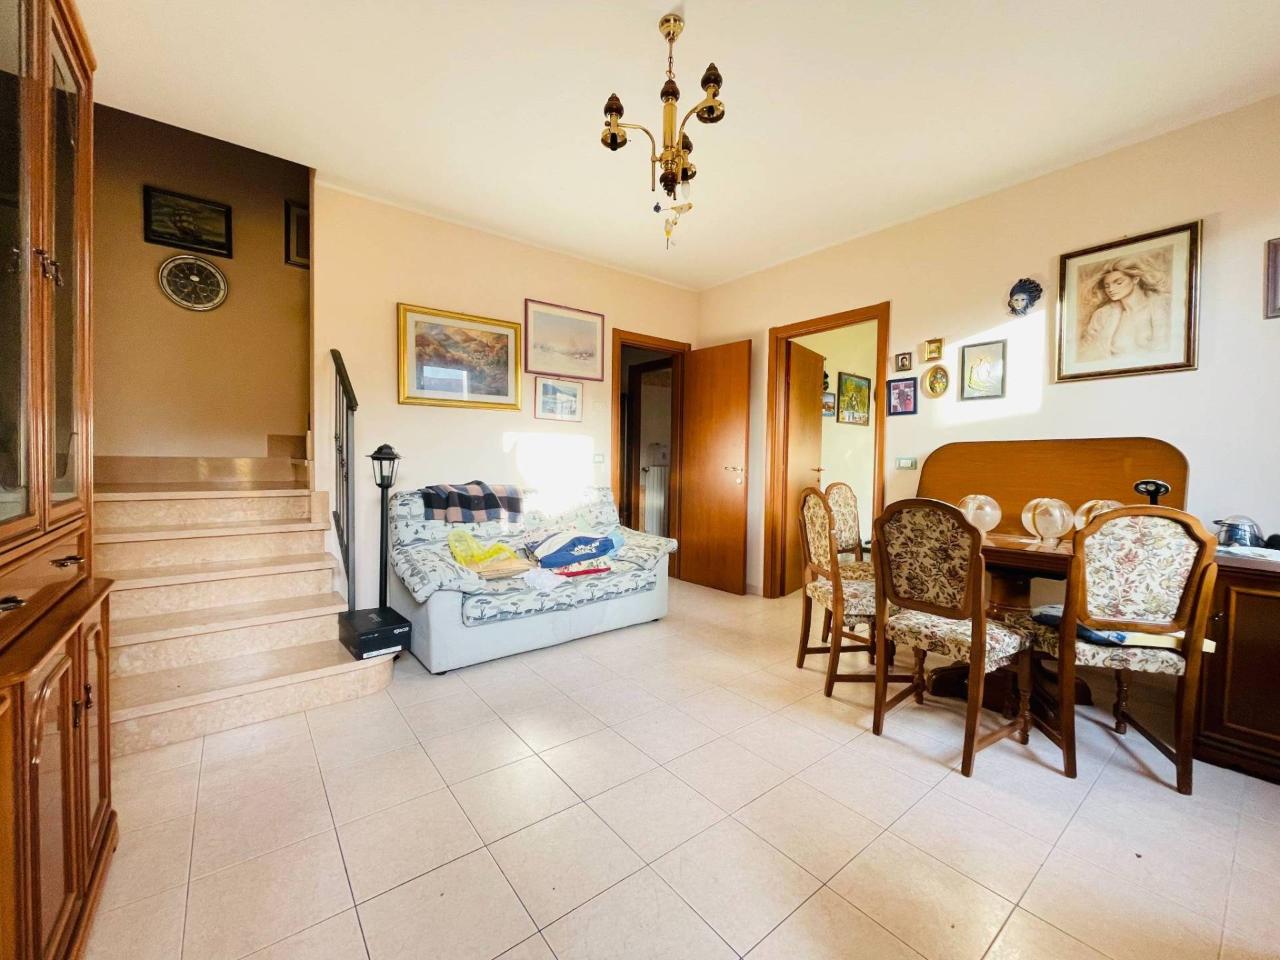 Villa a schiera in vendita a Legnago